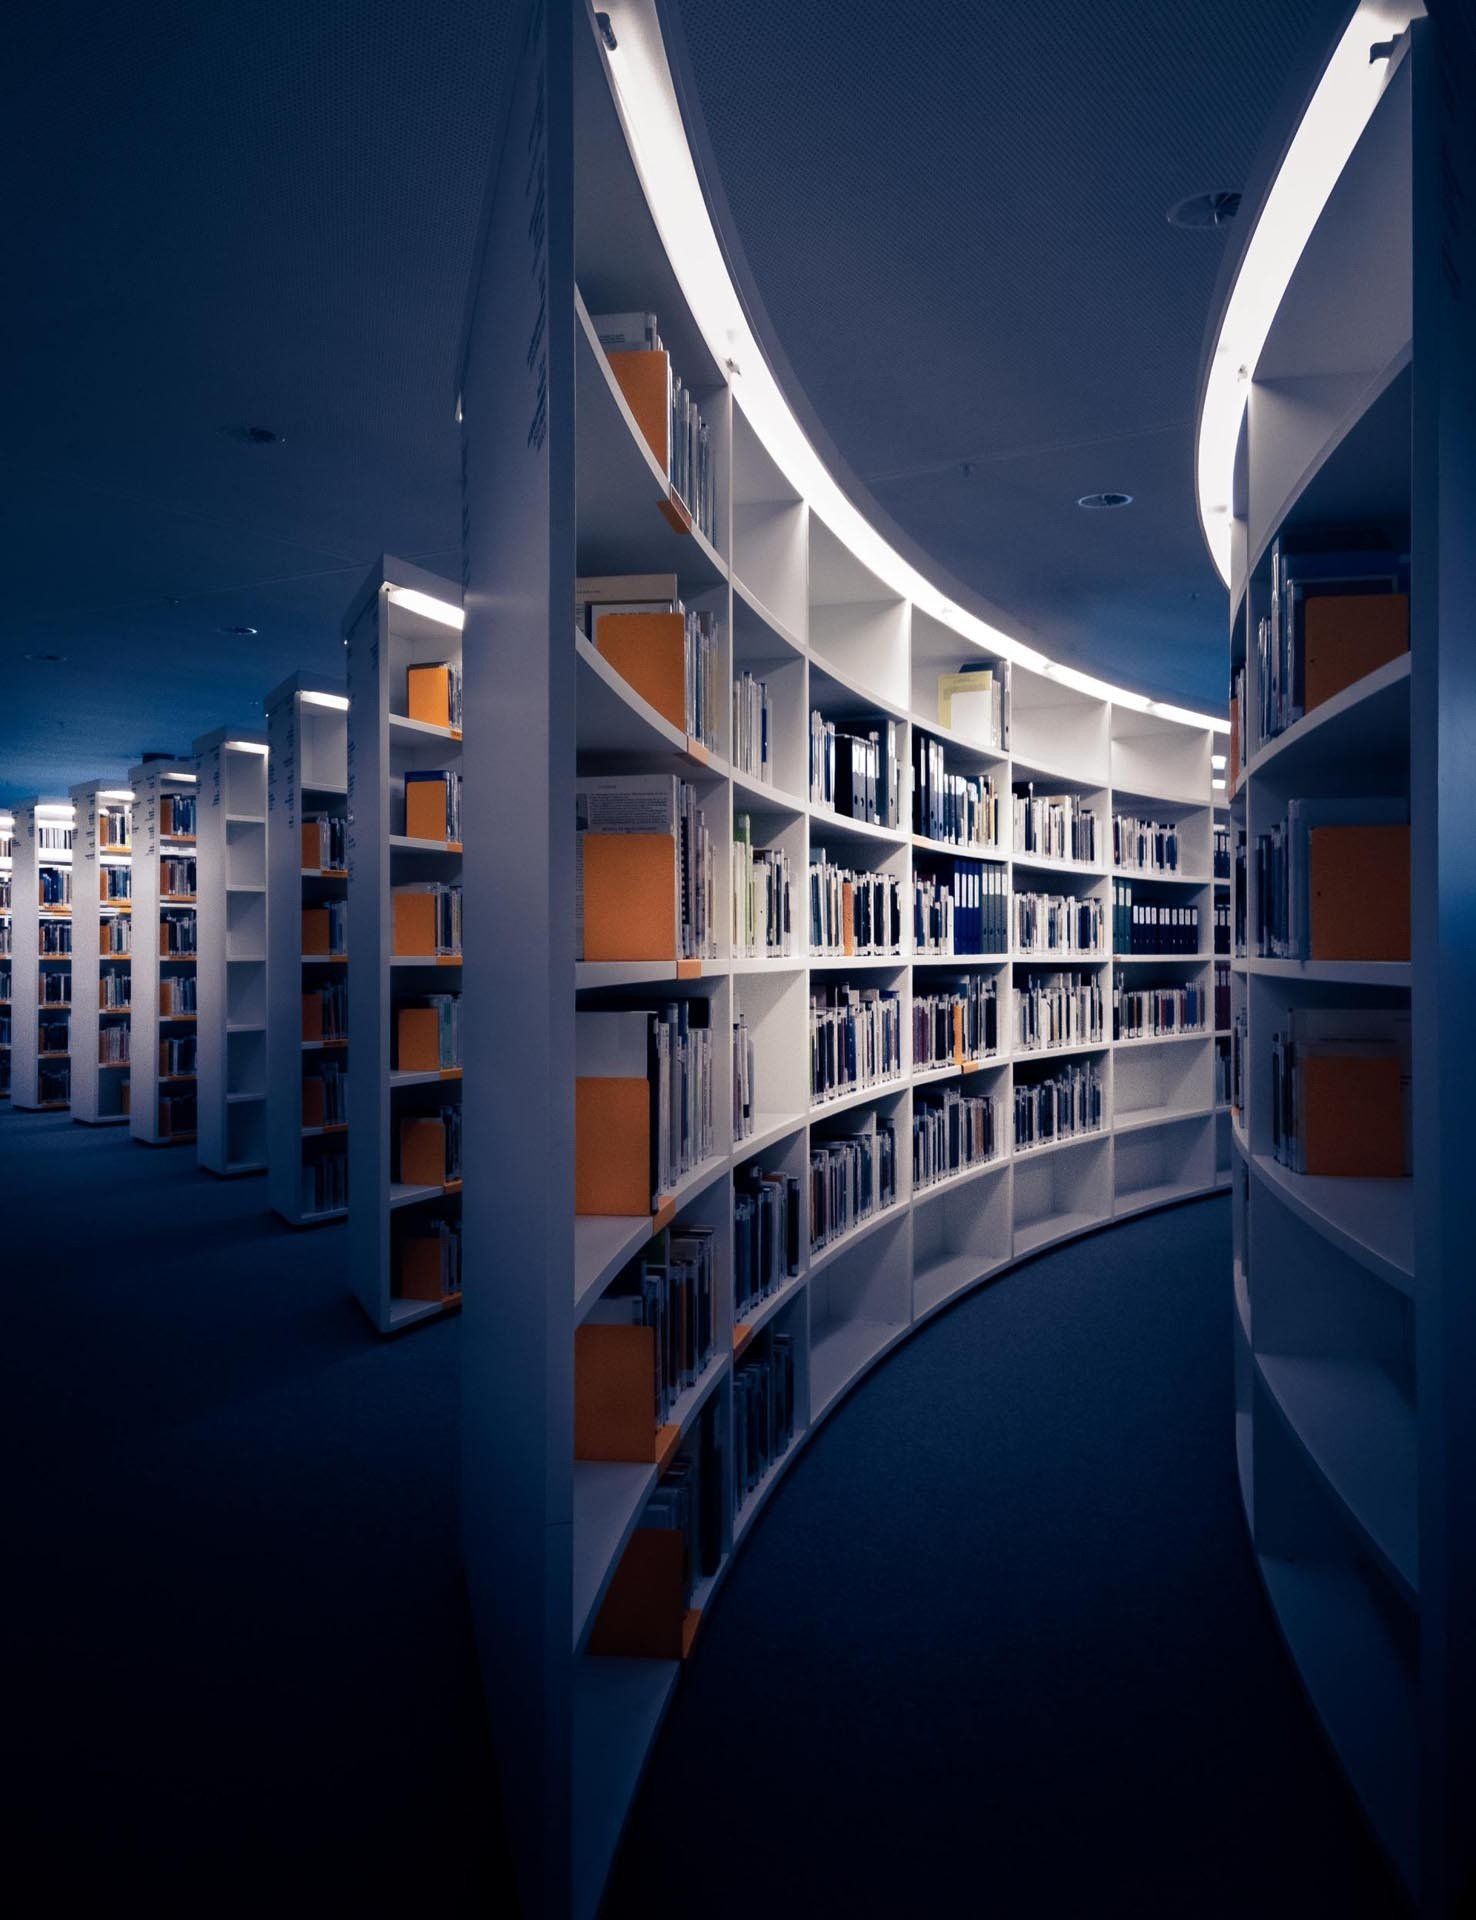 Bibliothek mit gekrümmten Bücherregalen